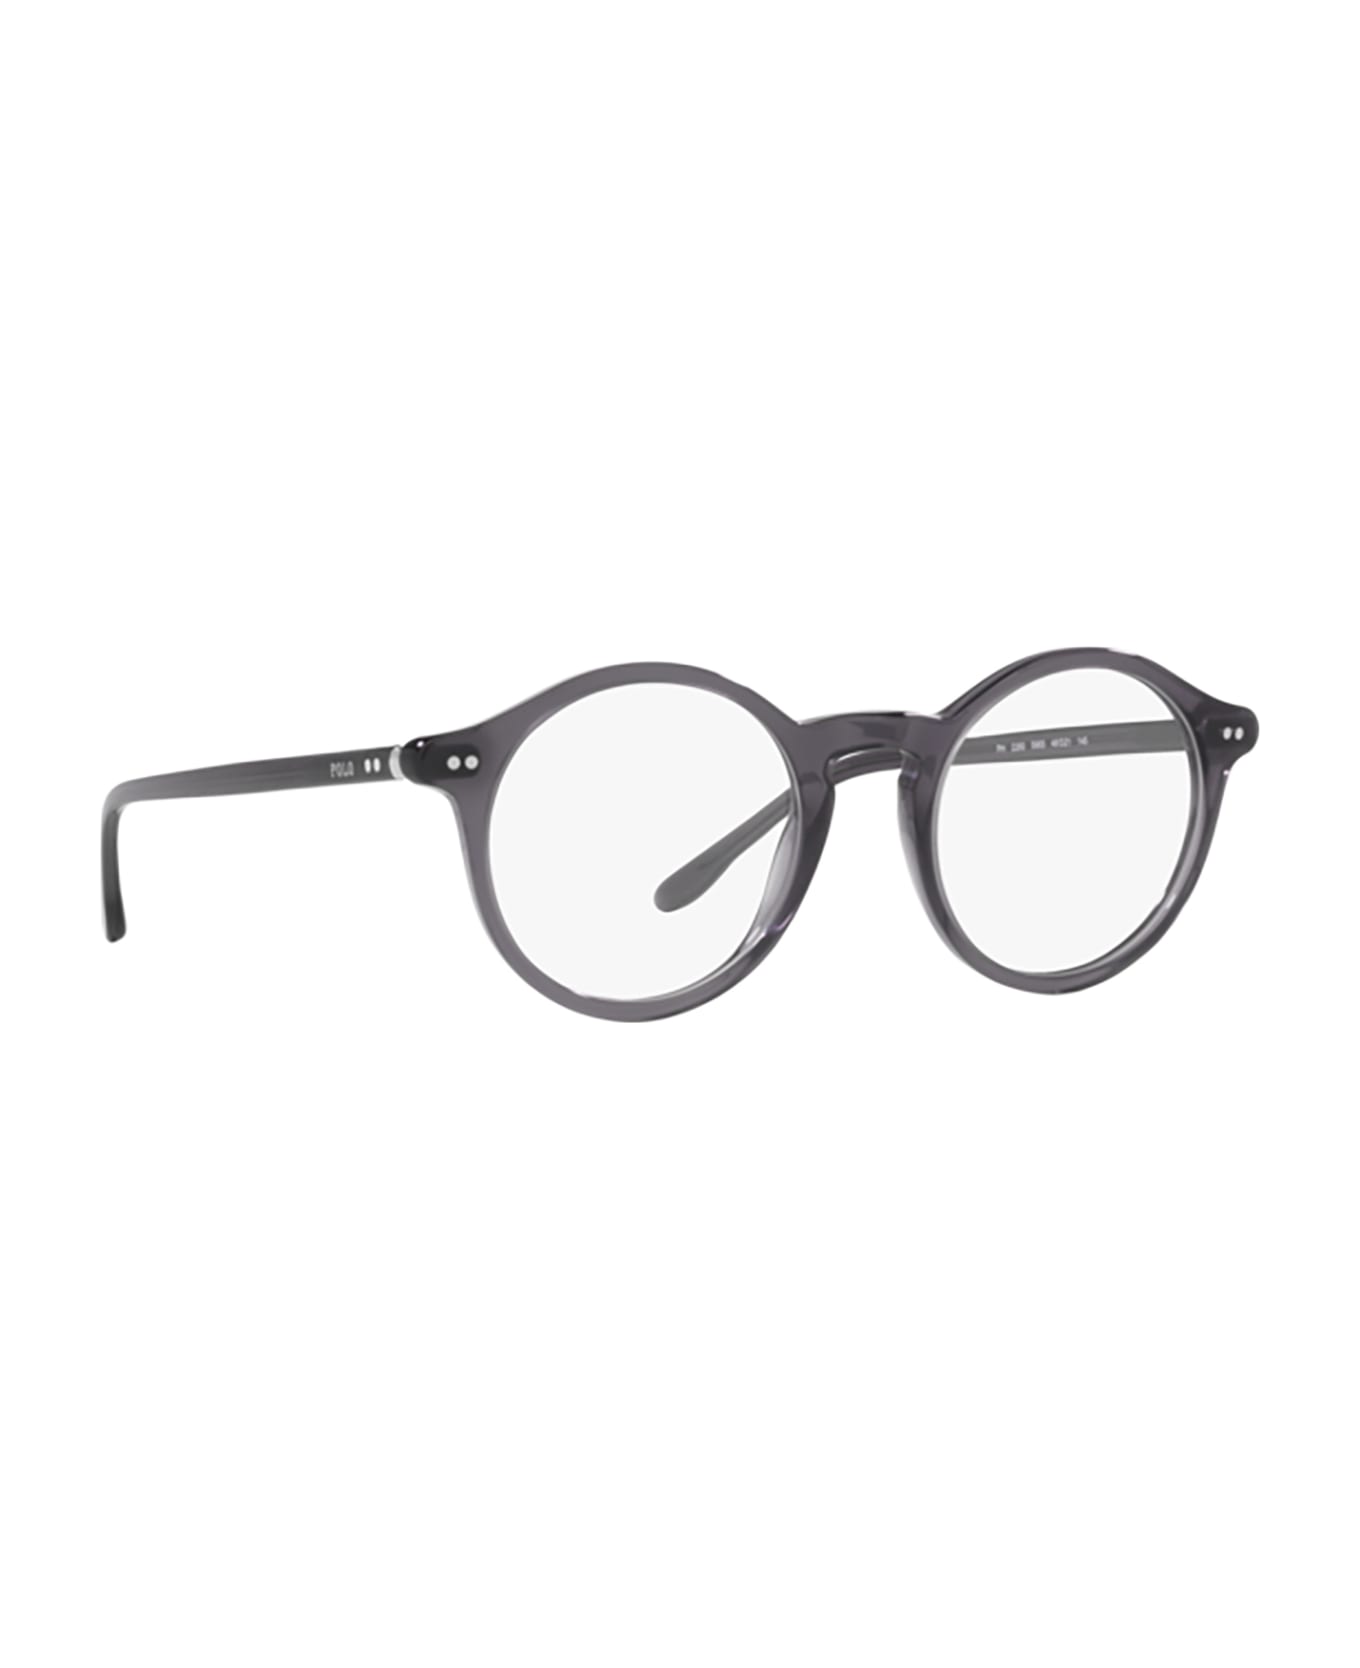 Polo Ralph Lauren Ph2260 Shiny Transparent Grey Glasses - Shiny Transparent Grey